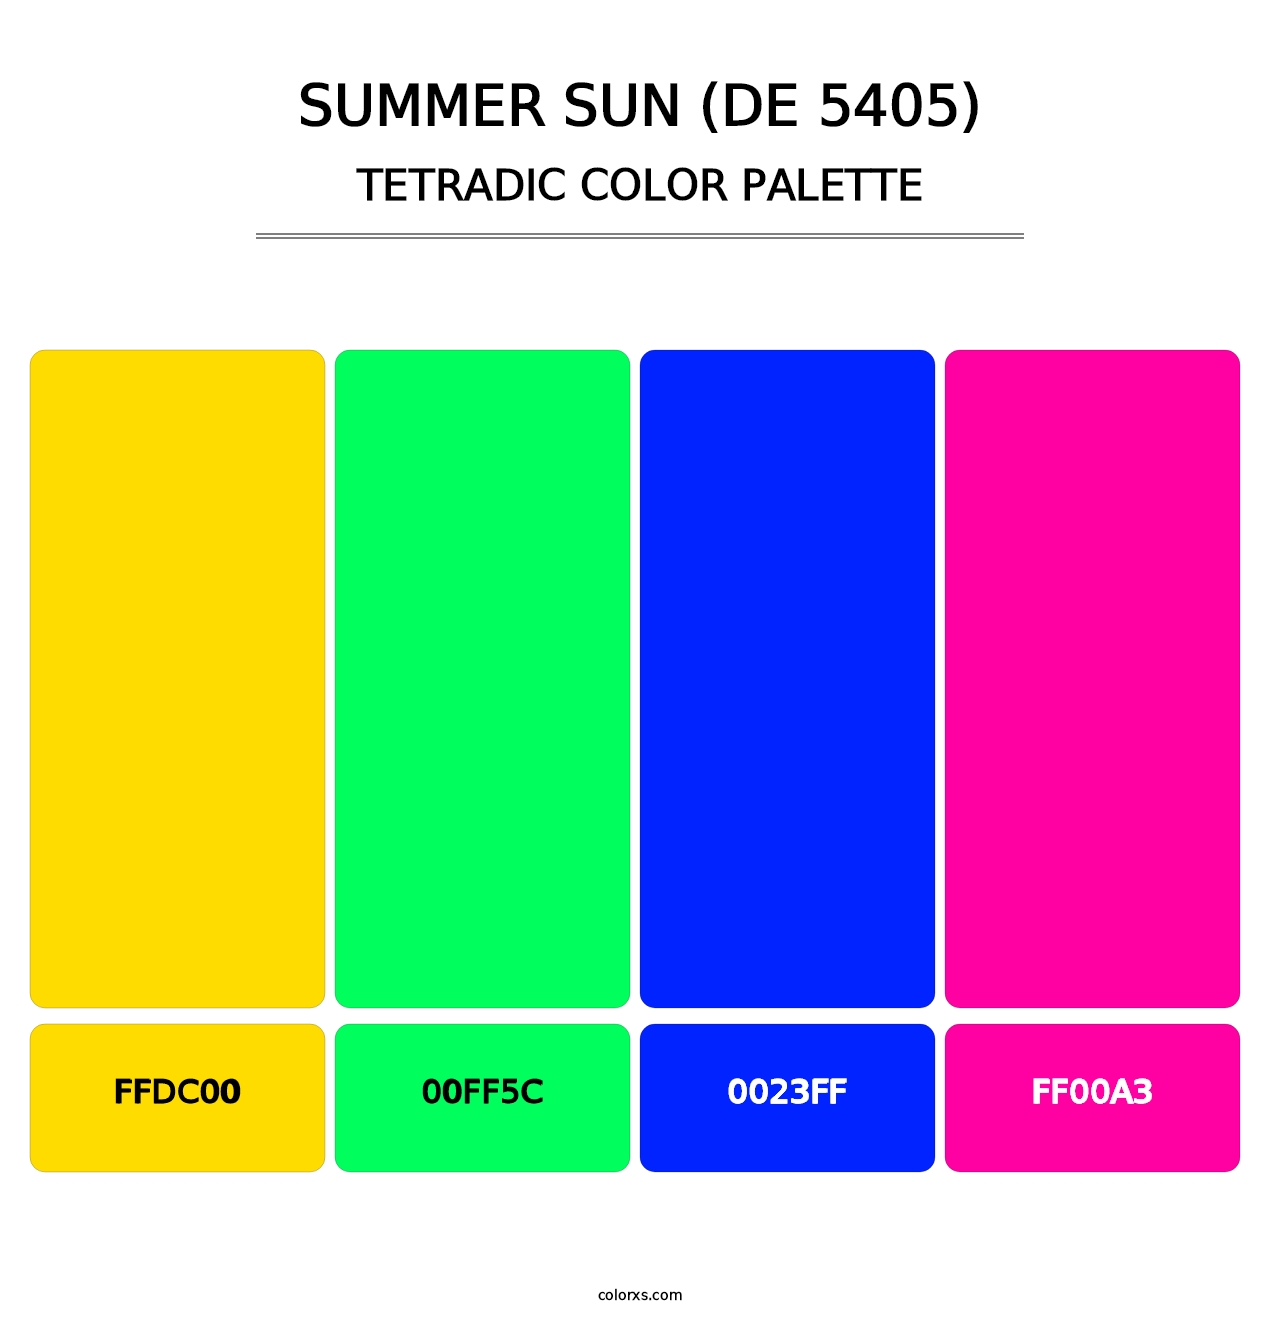 Summer Sun (DE 5405) - Tetradic Color Palette